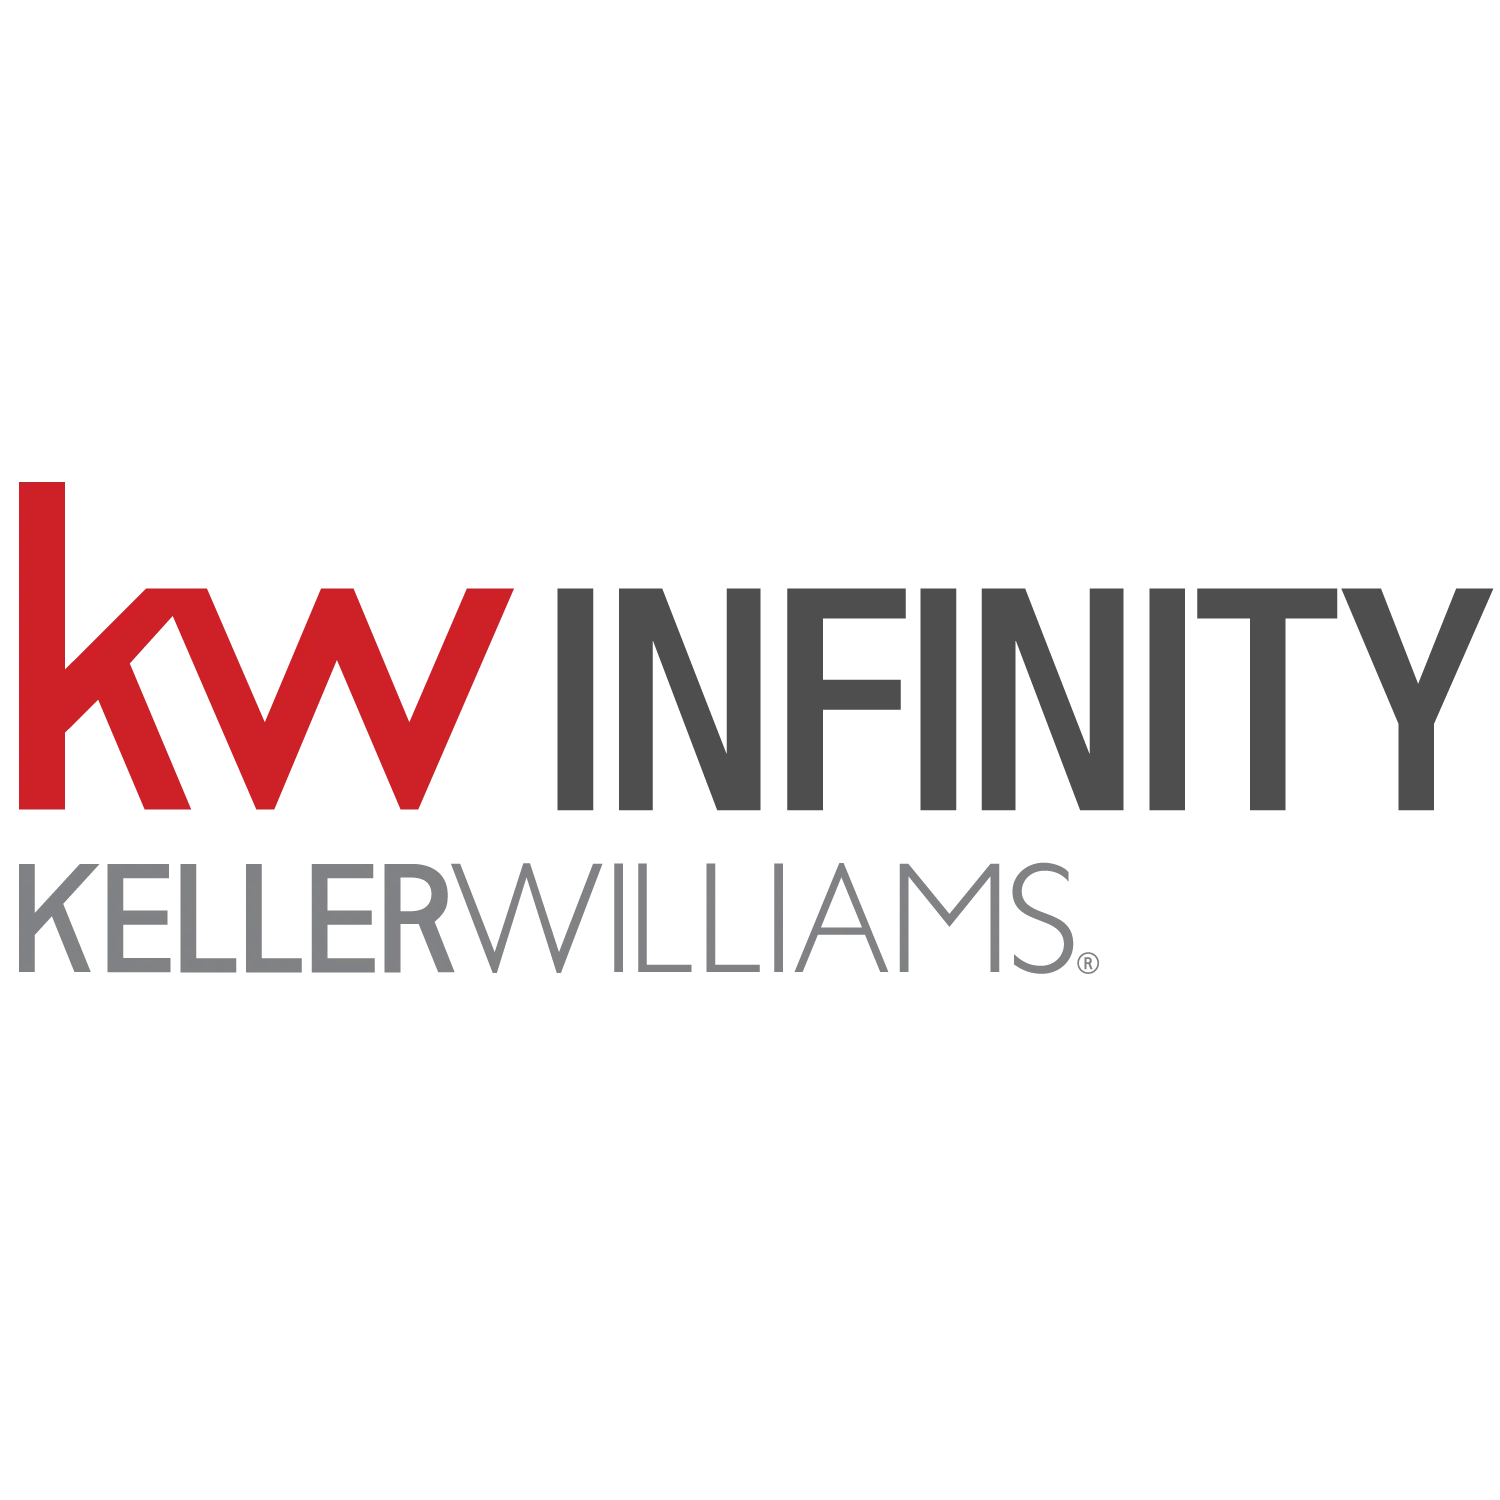 Keller Williams Infinity